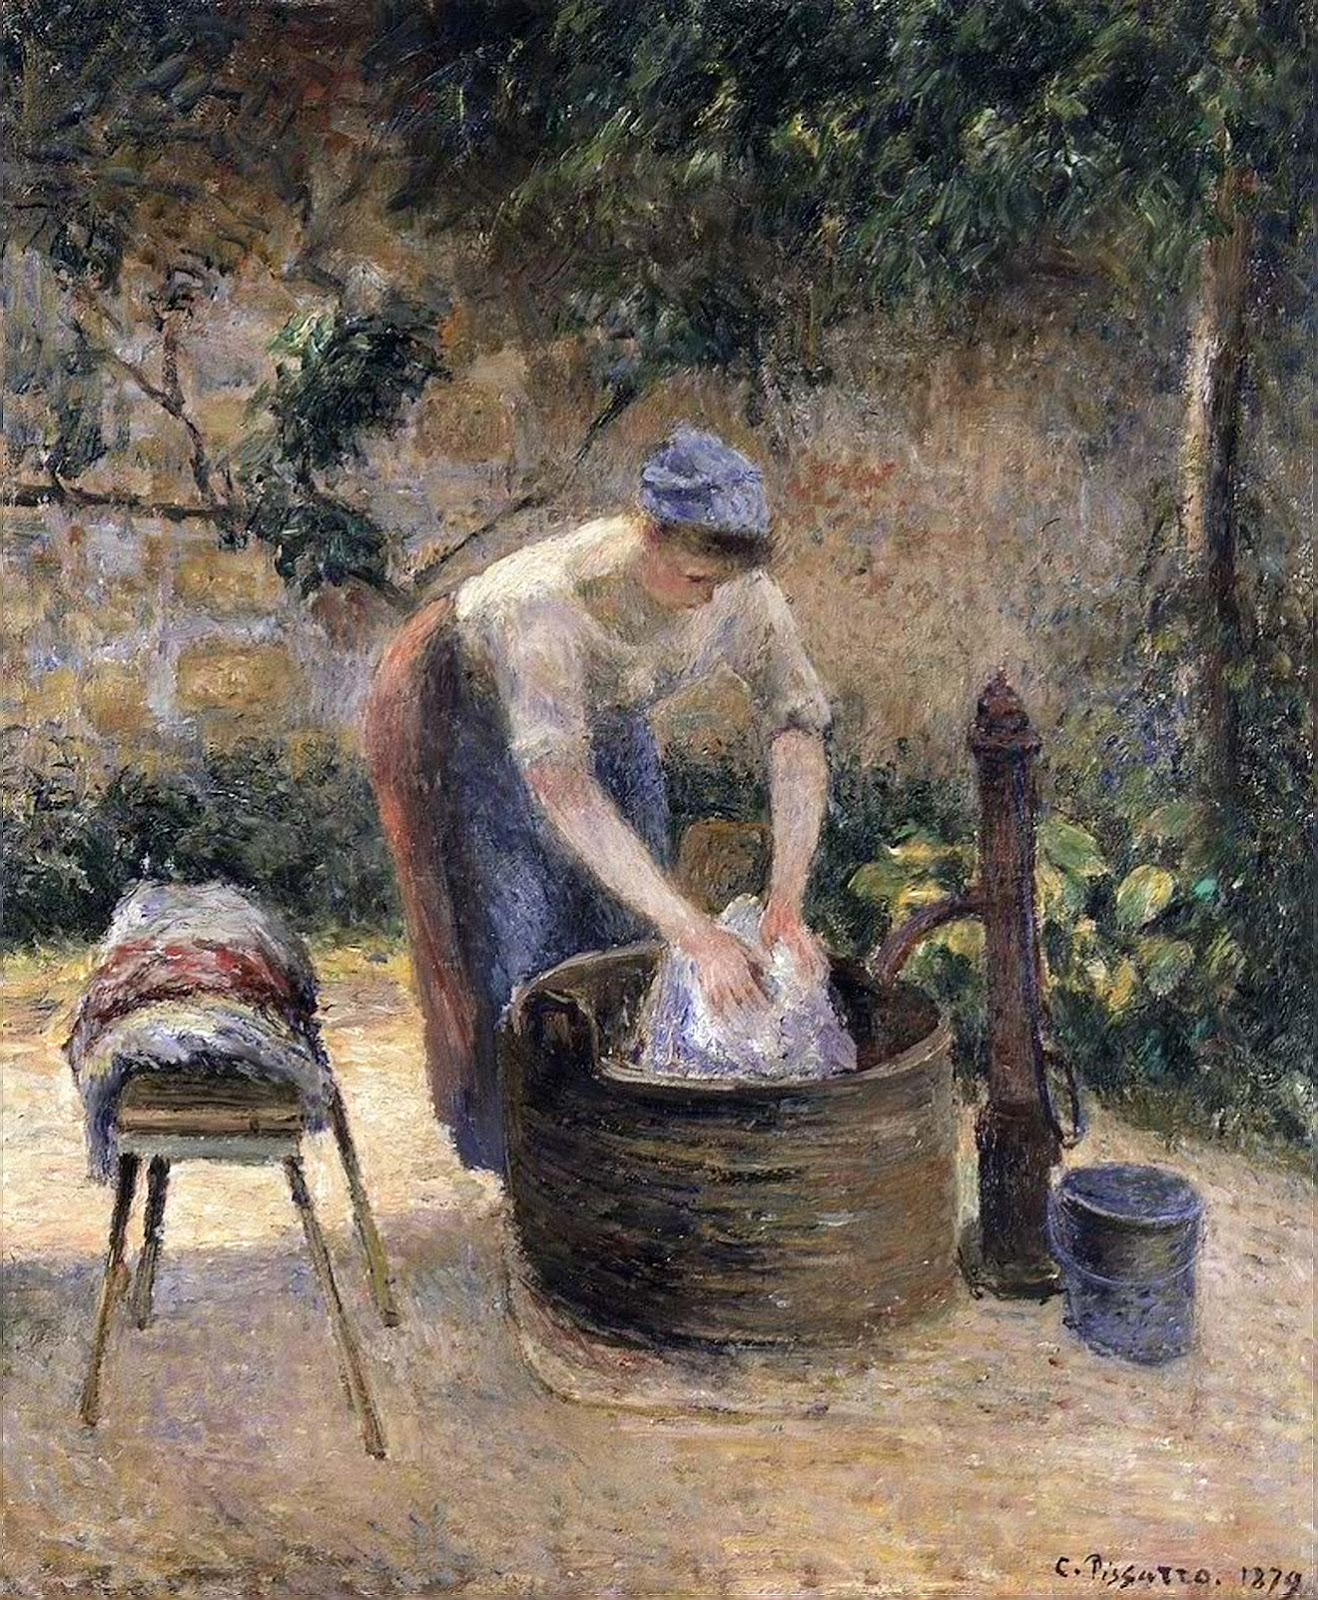 Camille+Pissarro-1830-1903 (226).jpg